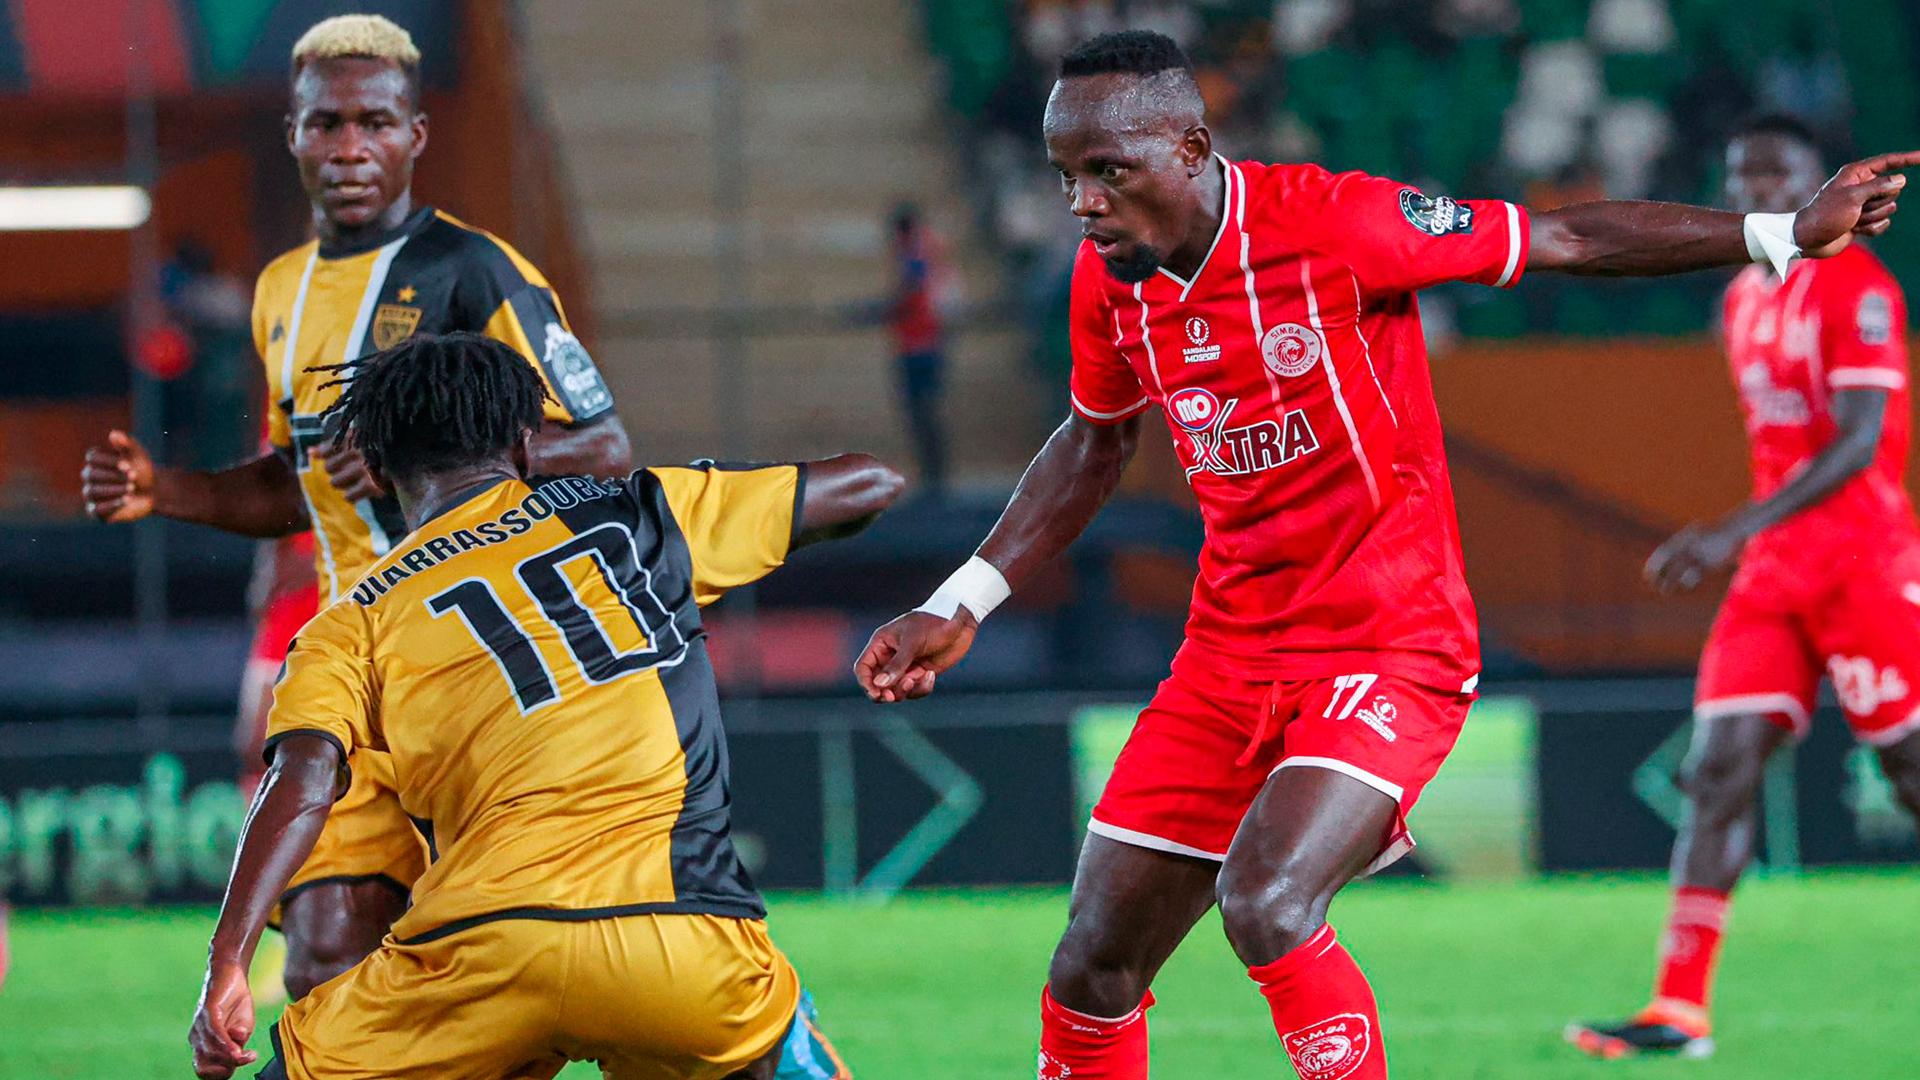 VIDEO | CAF Champions League Highlights: ASEC Mimosas (CIV) vs Simba (TZA)